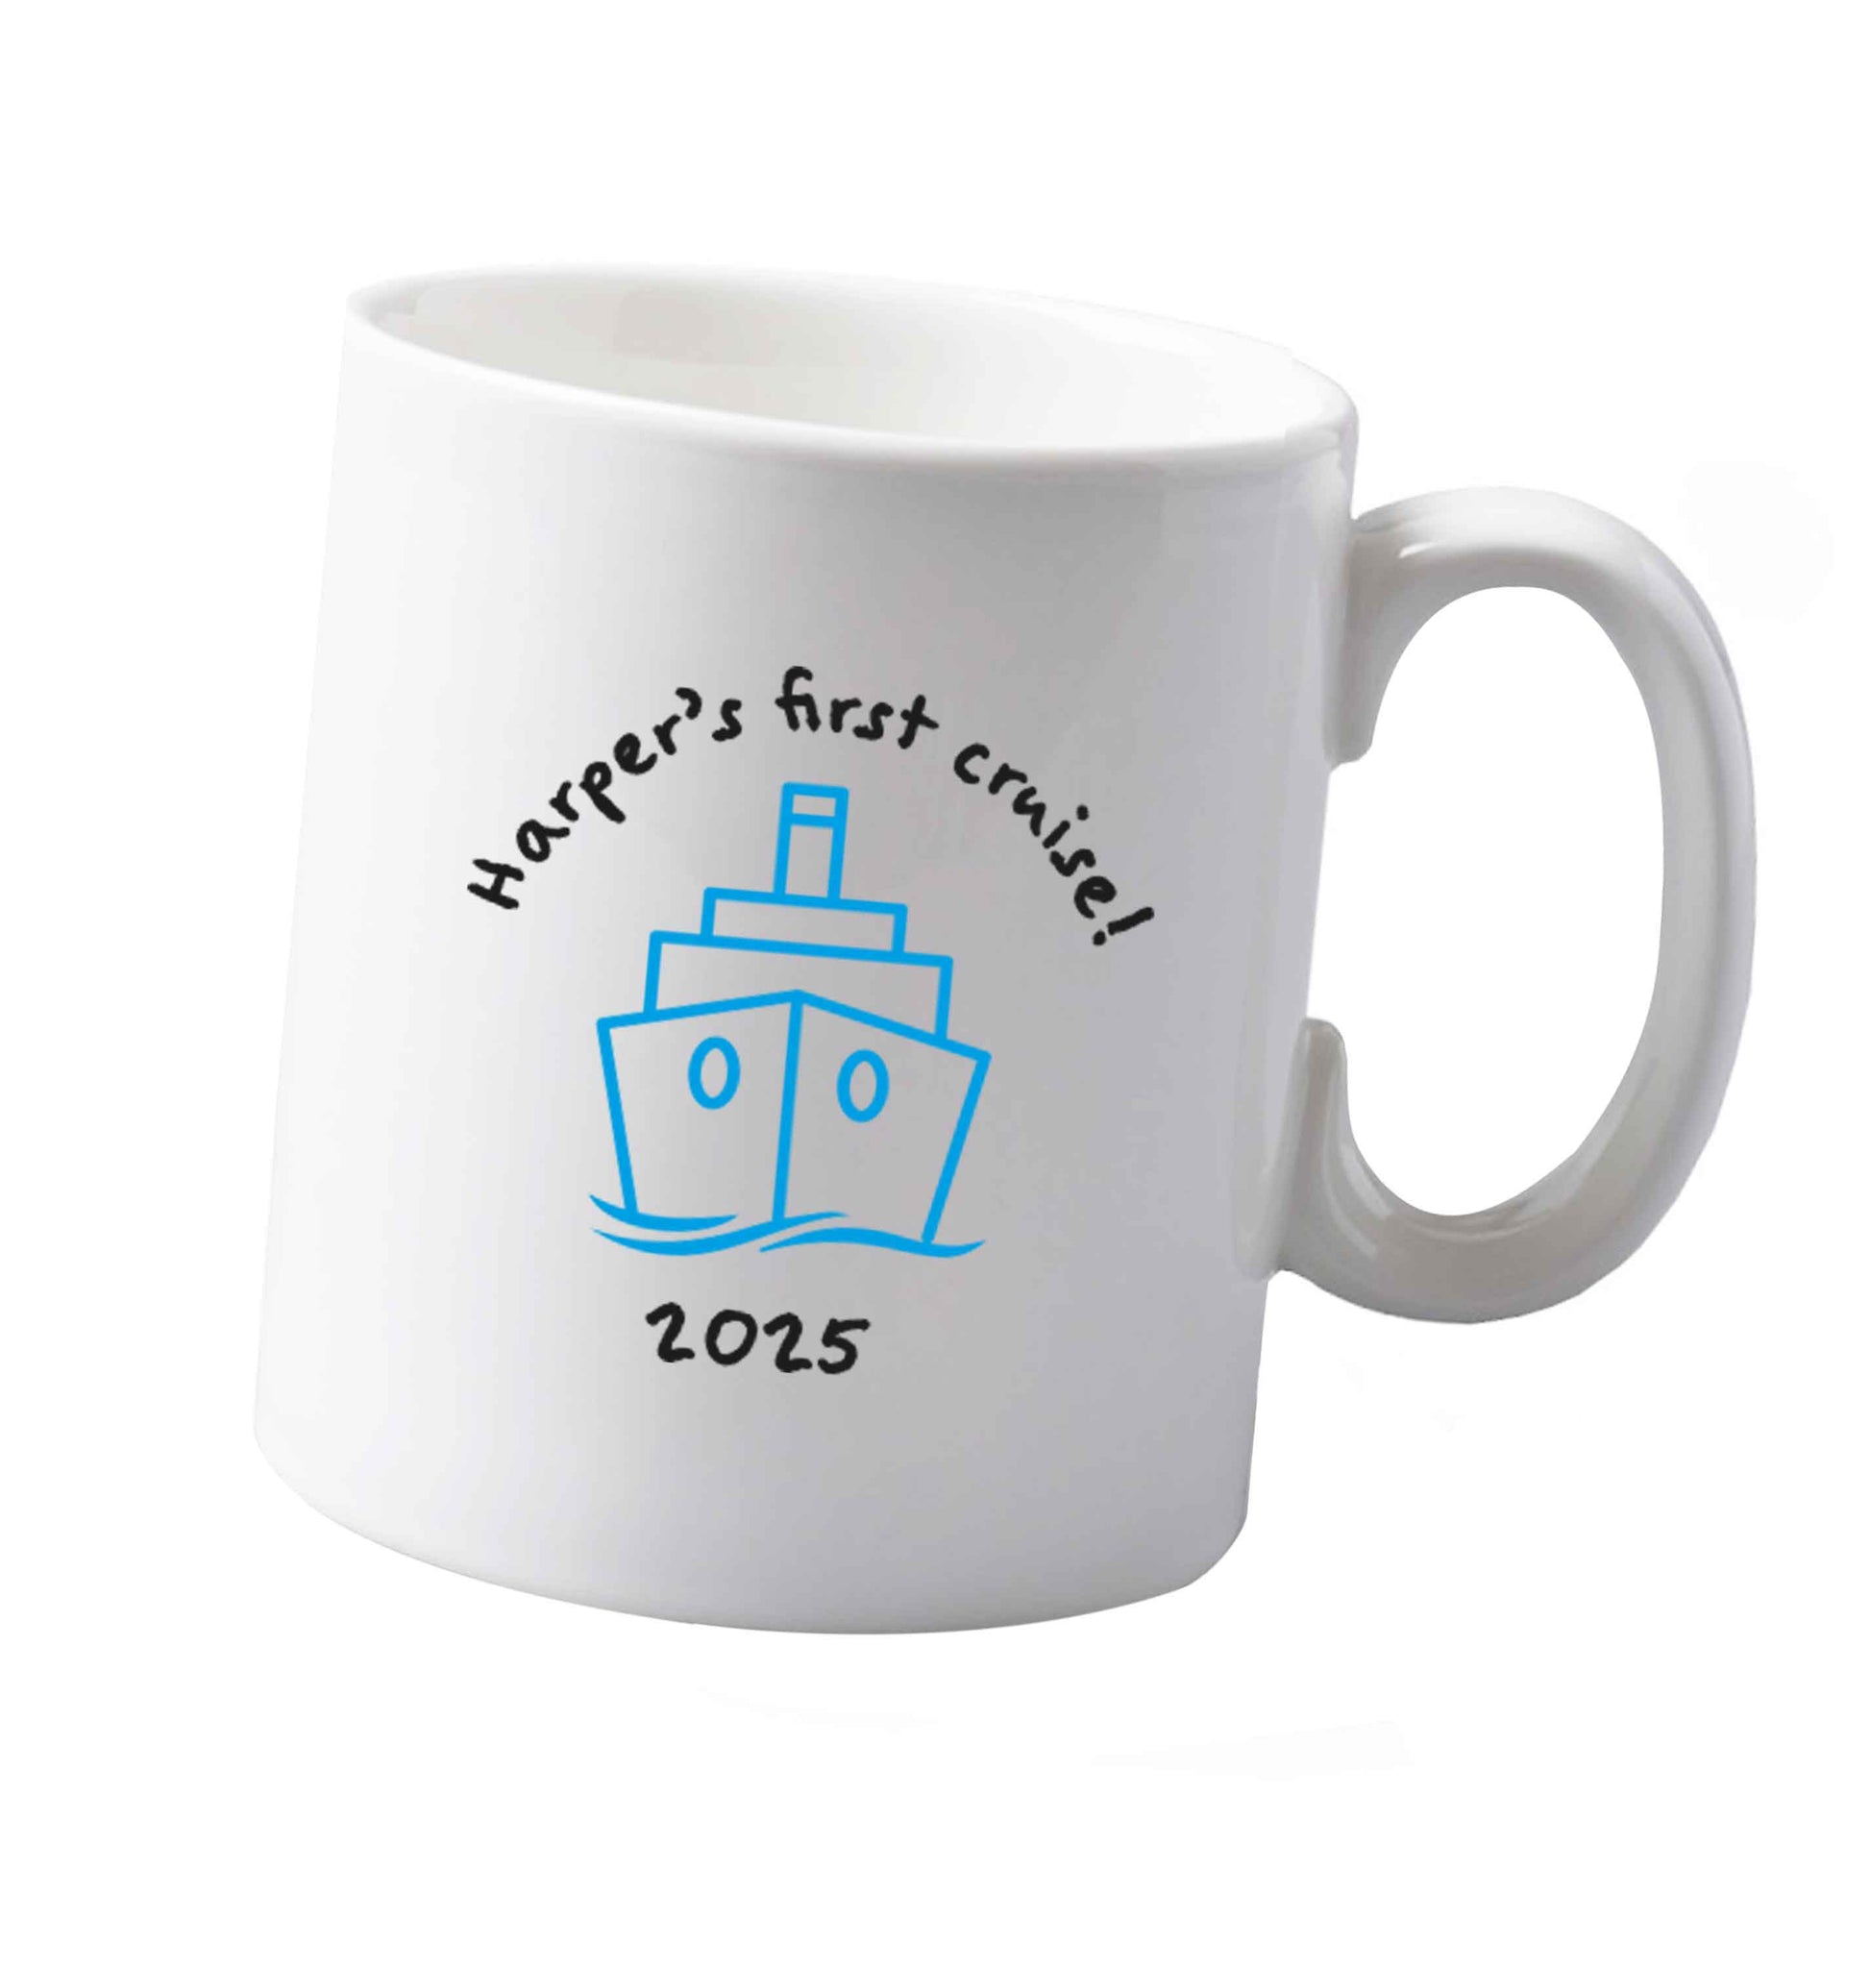 10 oz Personalised first cruise ceramic mug both sides